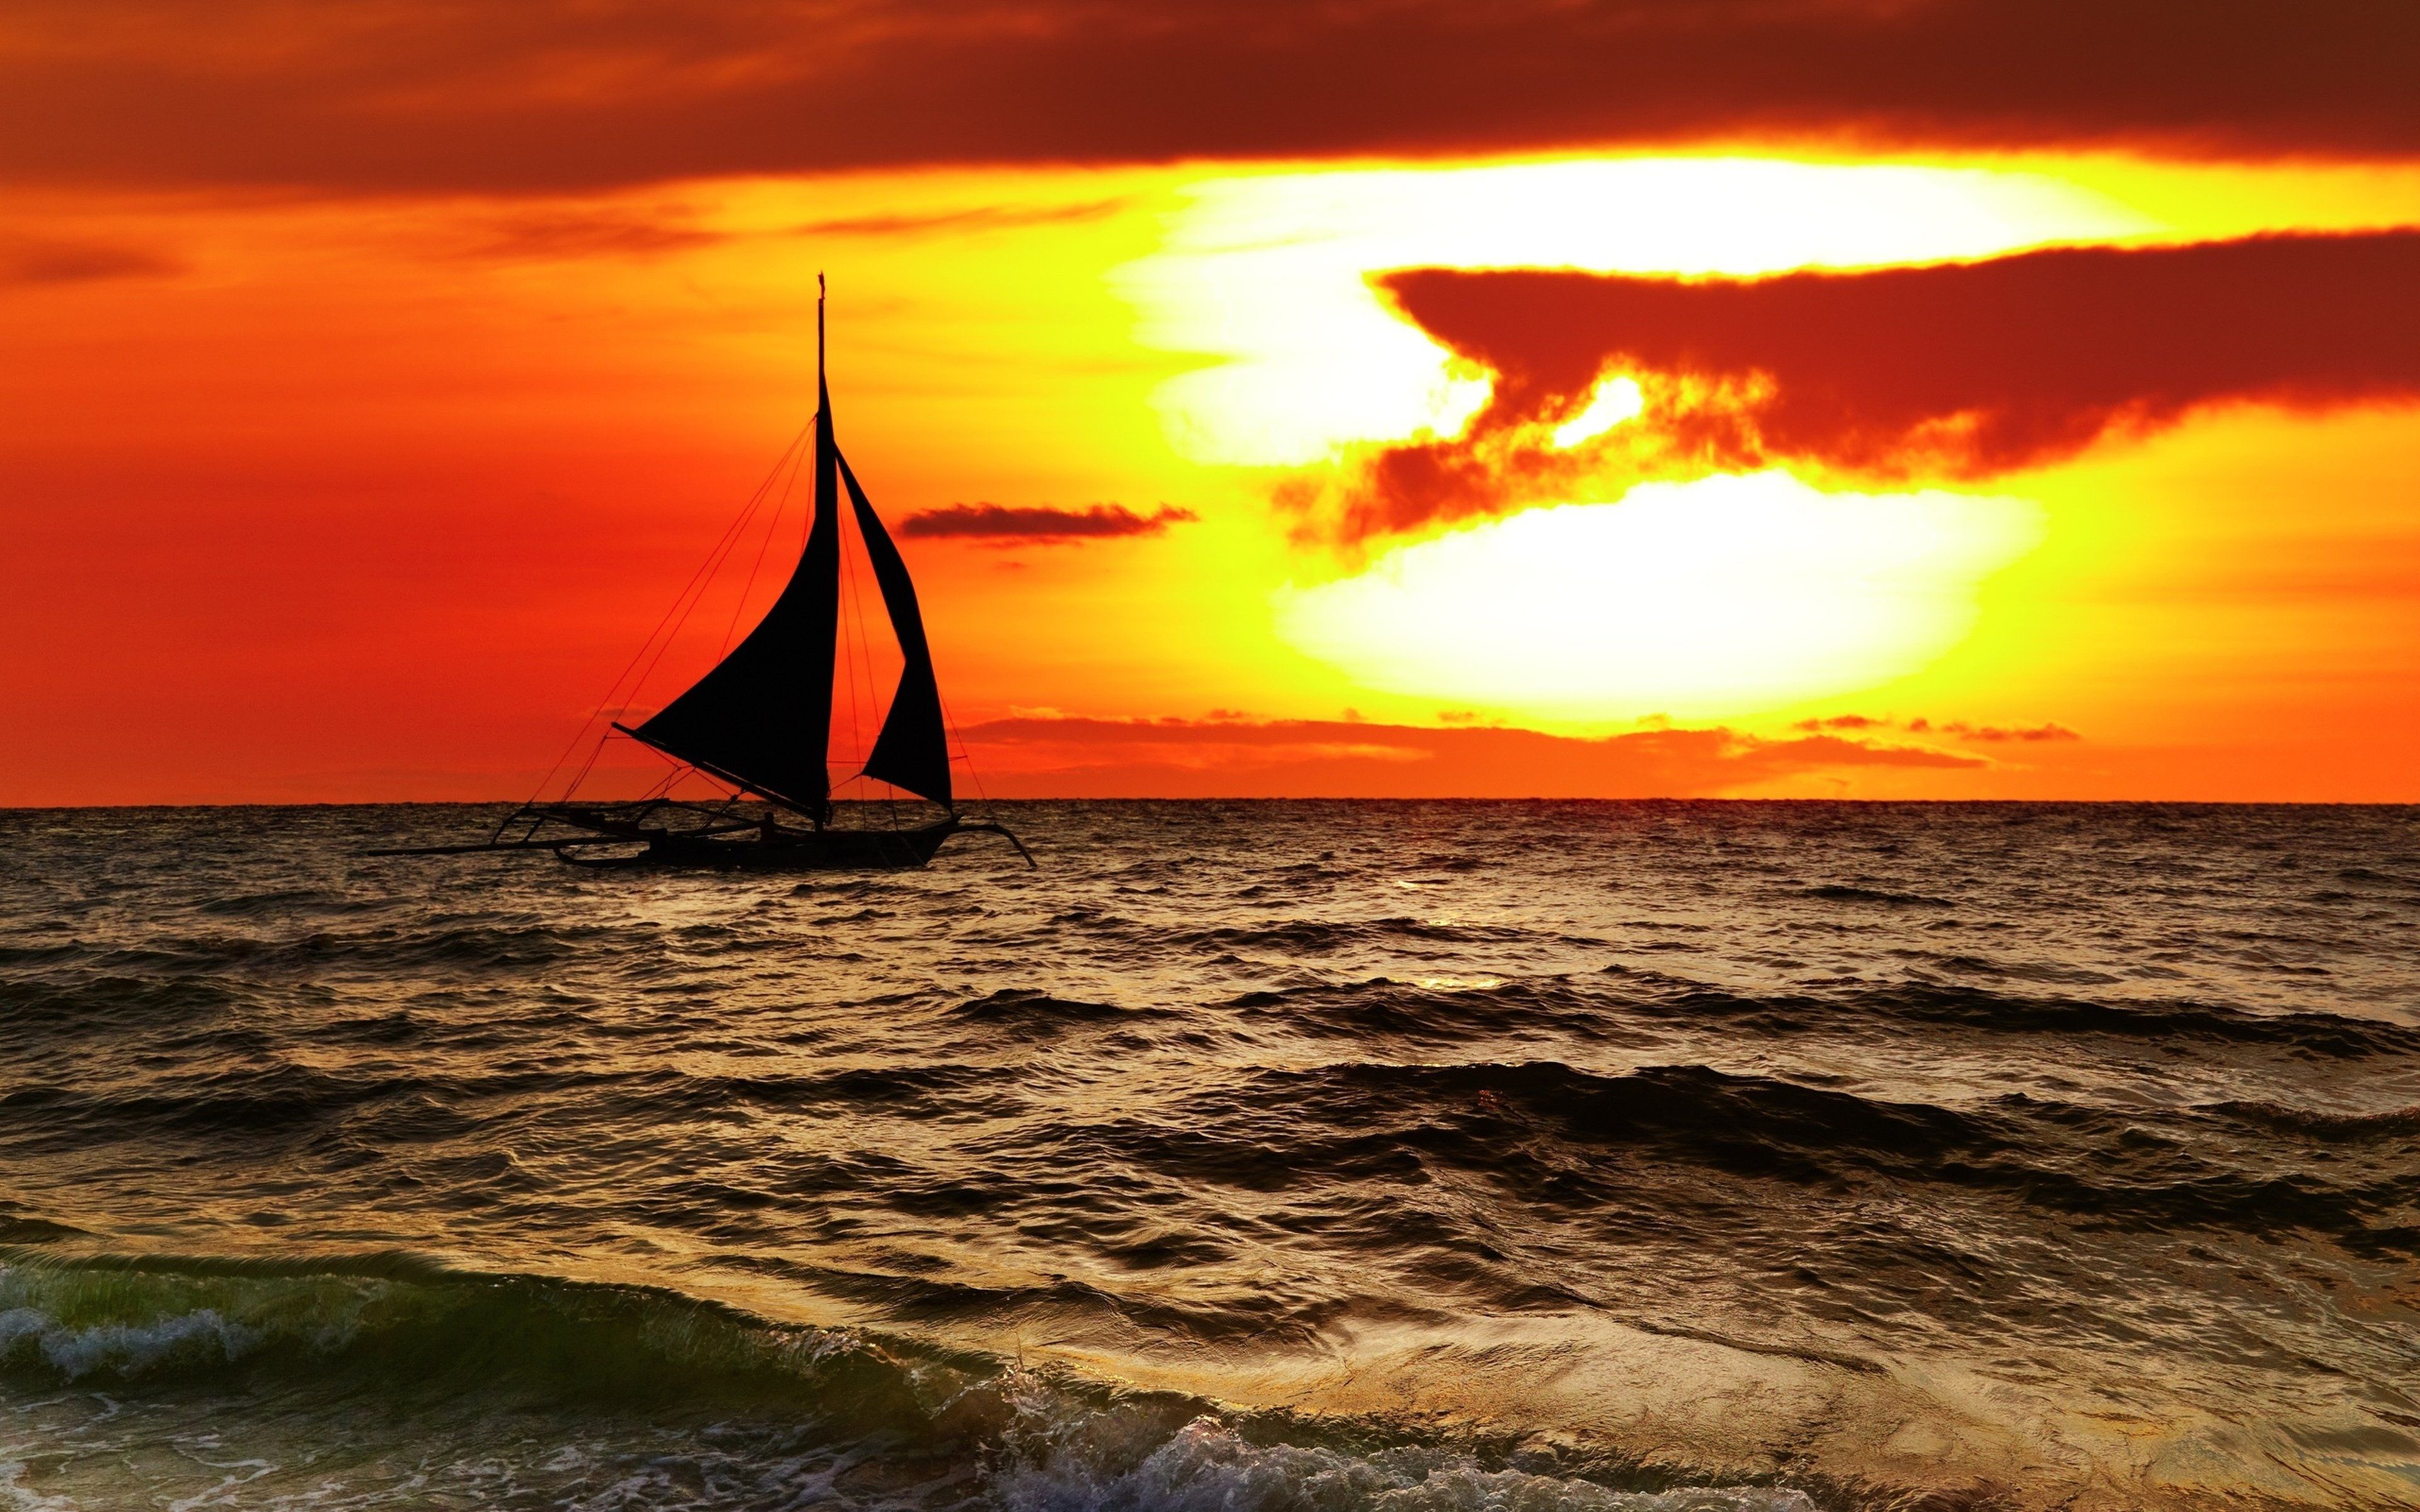 Sea ocean boat yacht sky clouds sunset orange landscapes nature